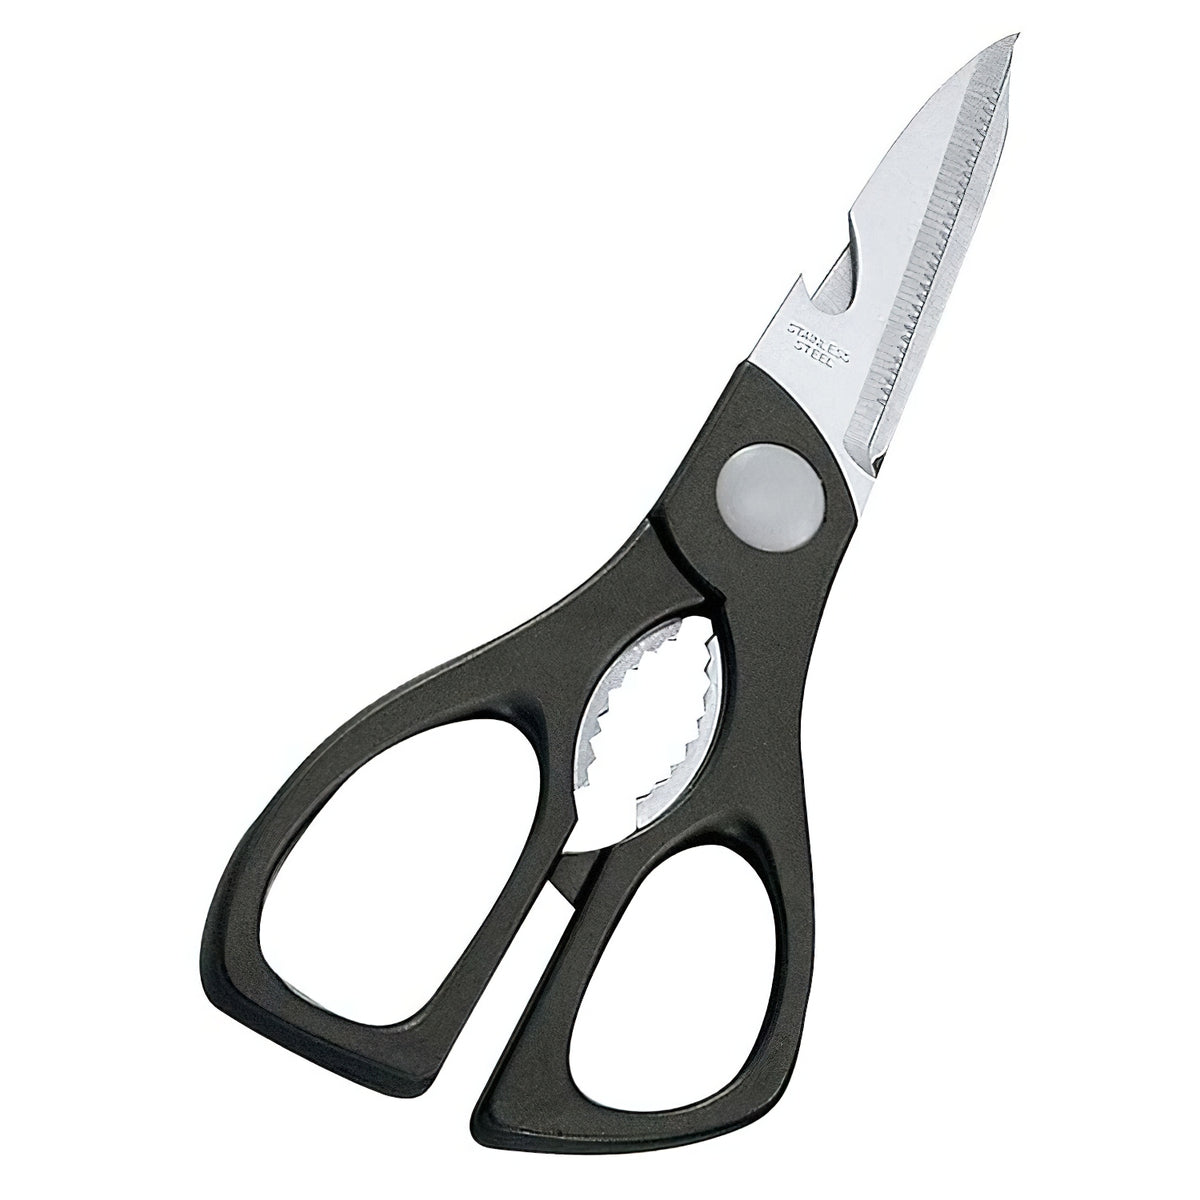 Fuji Cutlery Stainless Steel Kitchen Scissors